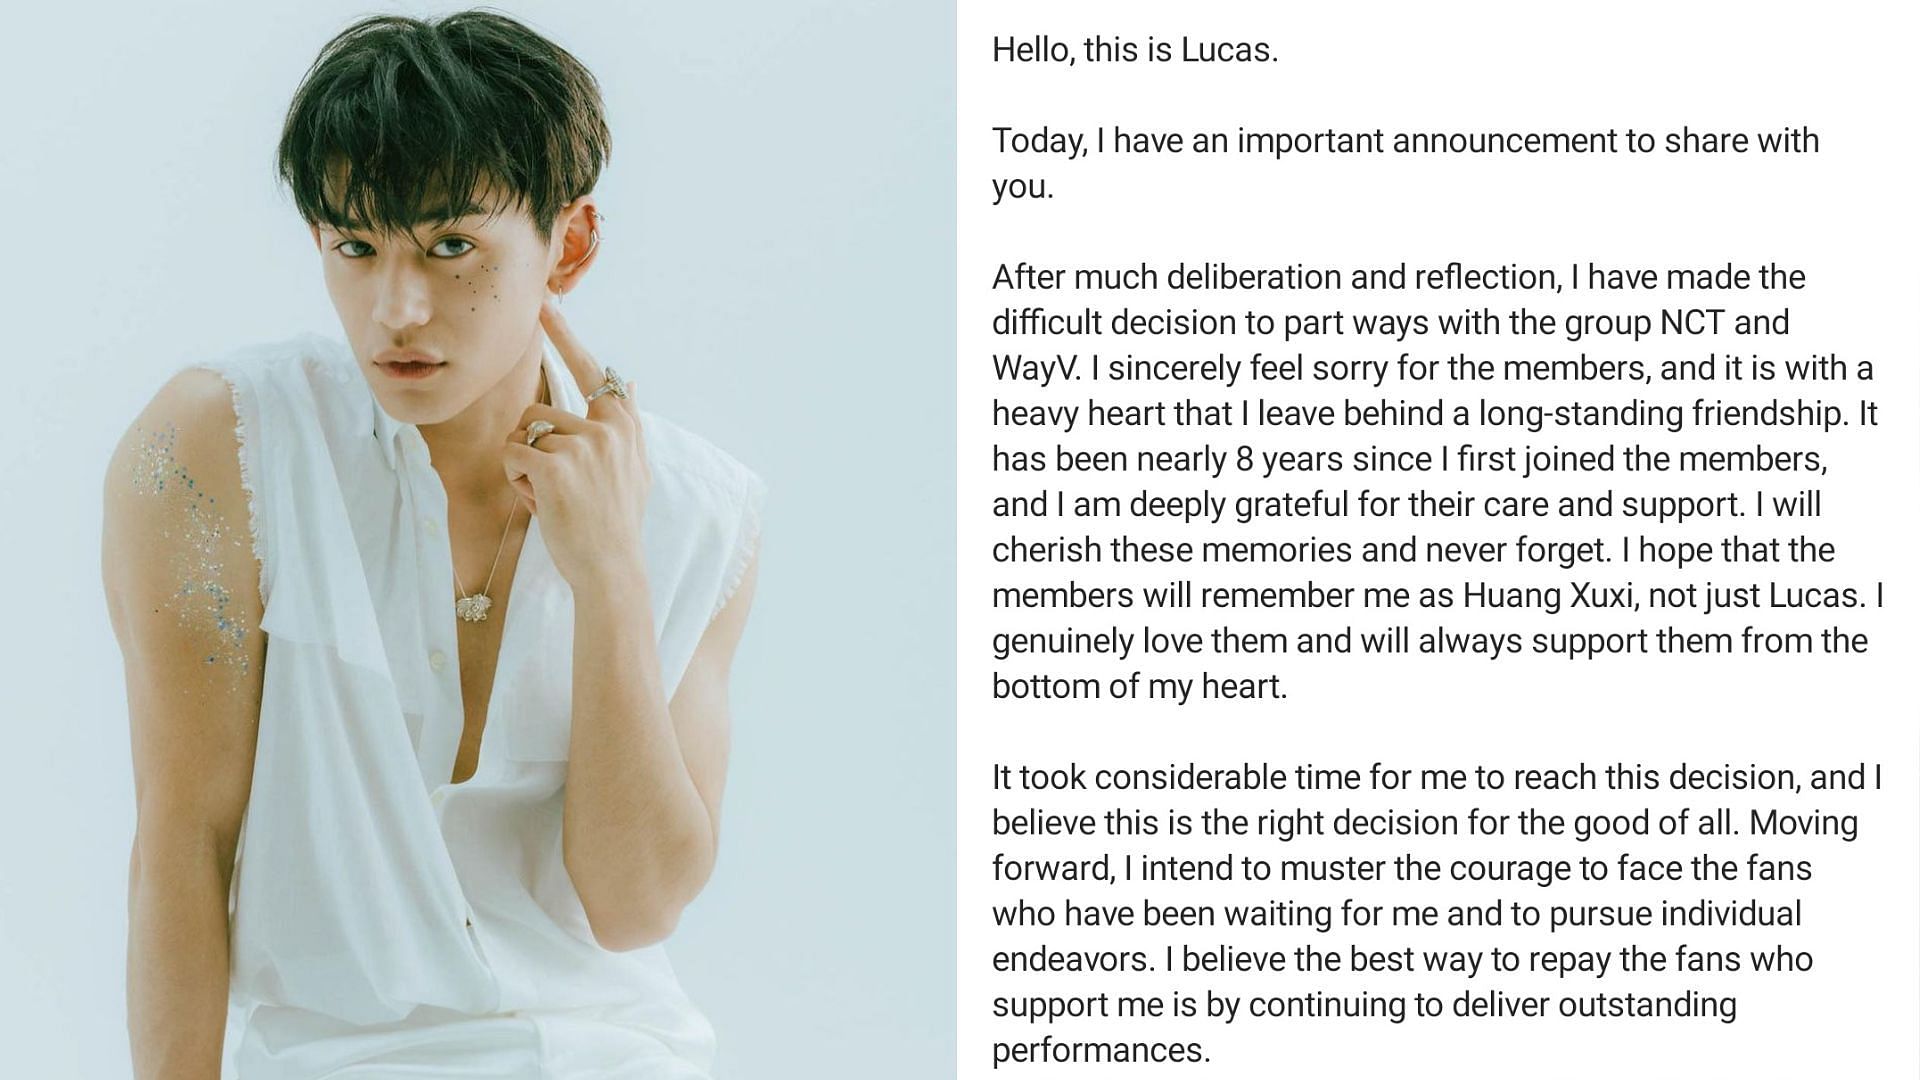 Lucas leaves K-pop groups NCT, WayV; pens letter to fans